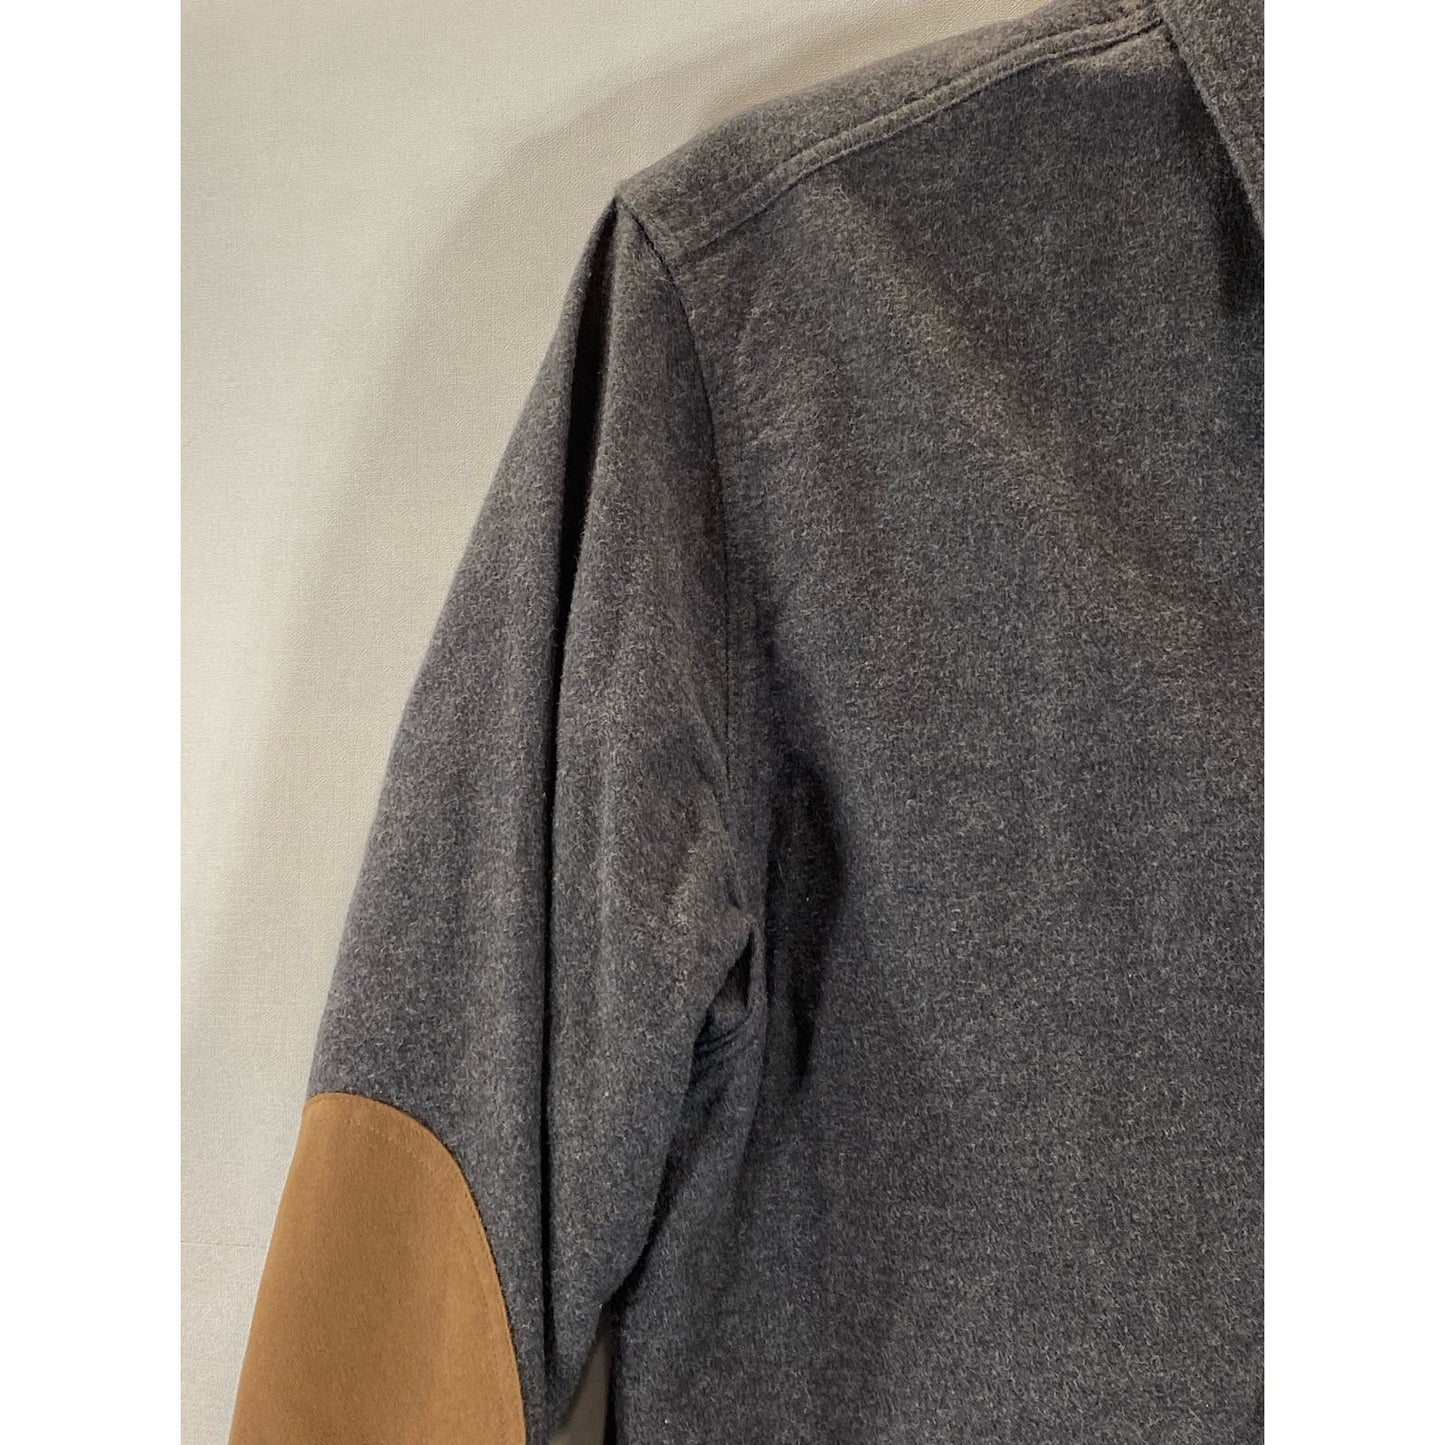 J. CREW Men's Charcoal Faux-Leather Elbow-Patch Button-Up Long Sleeve Shirt SZXS